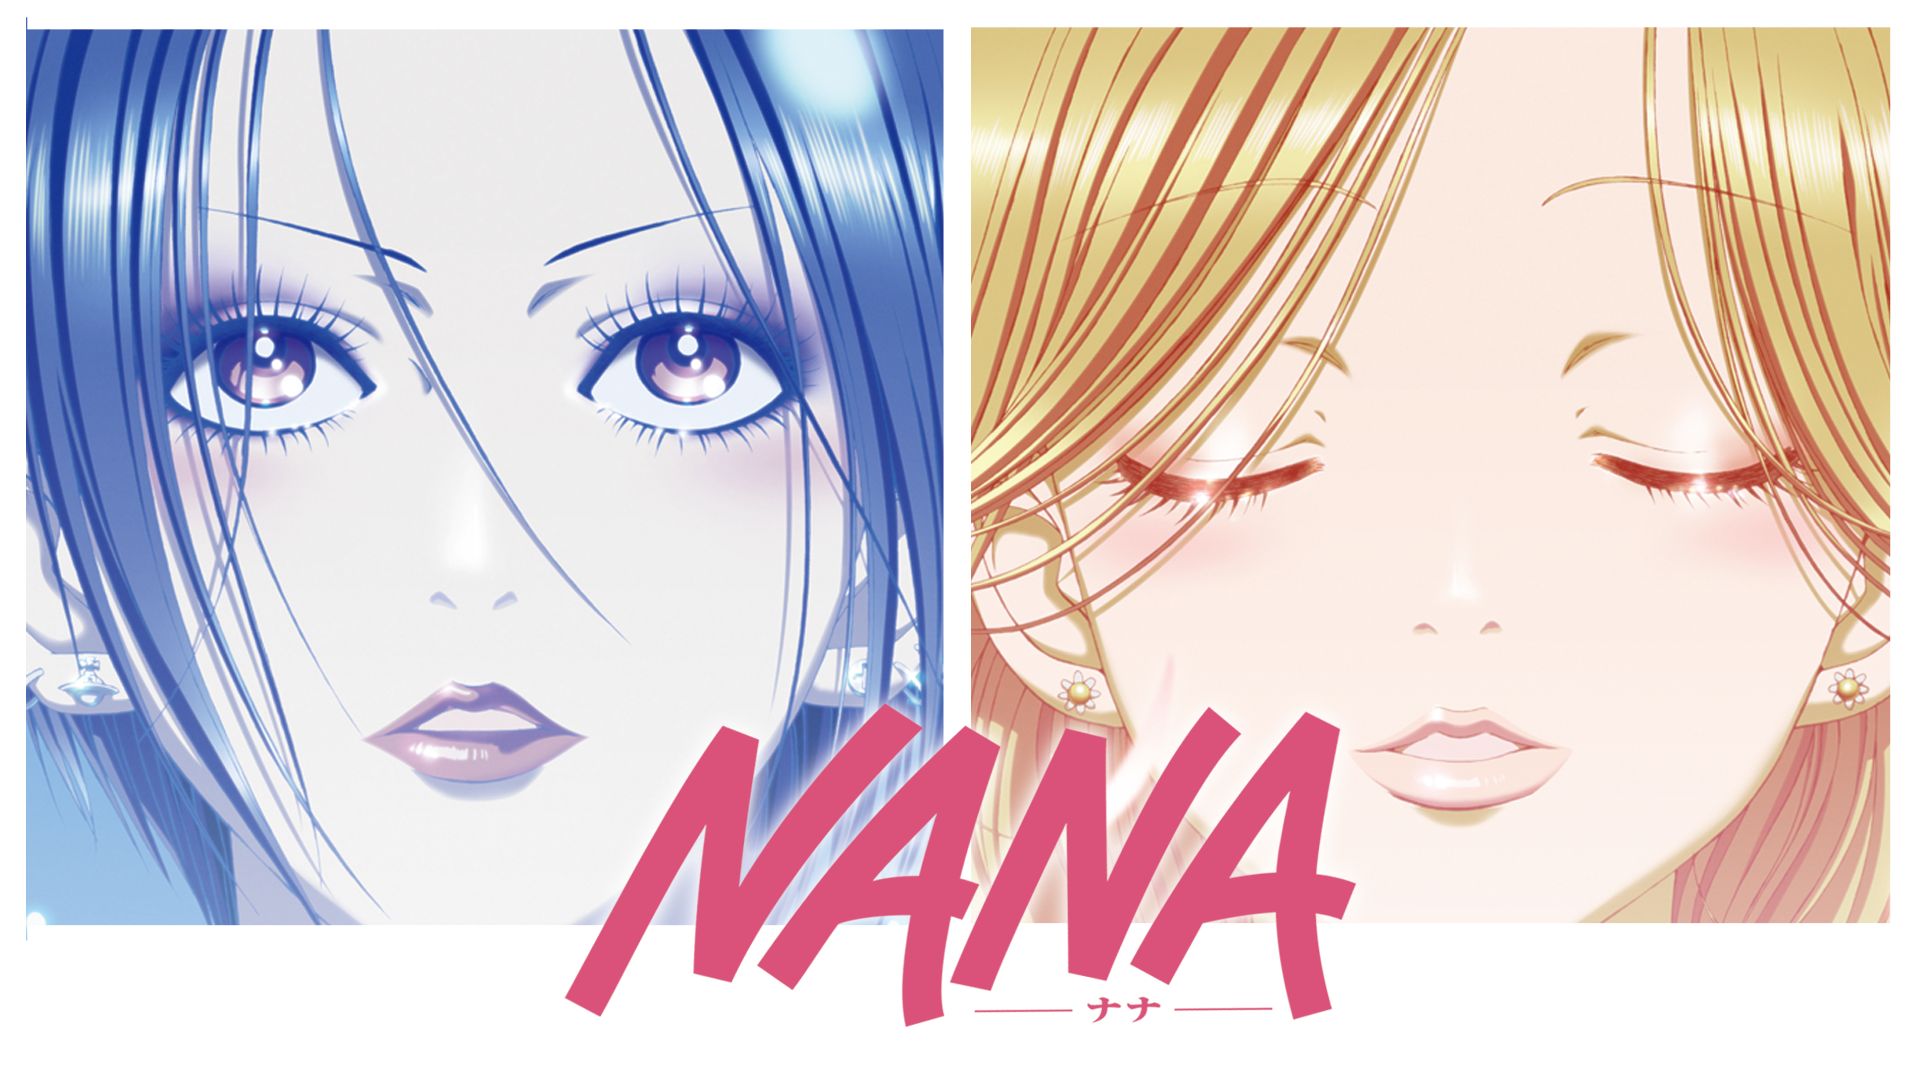 Nana ナナ アニメ の動画配信情報 無料で視聴する方法はある